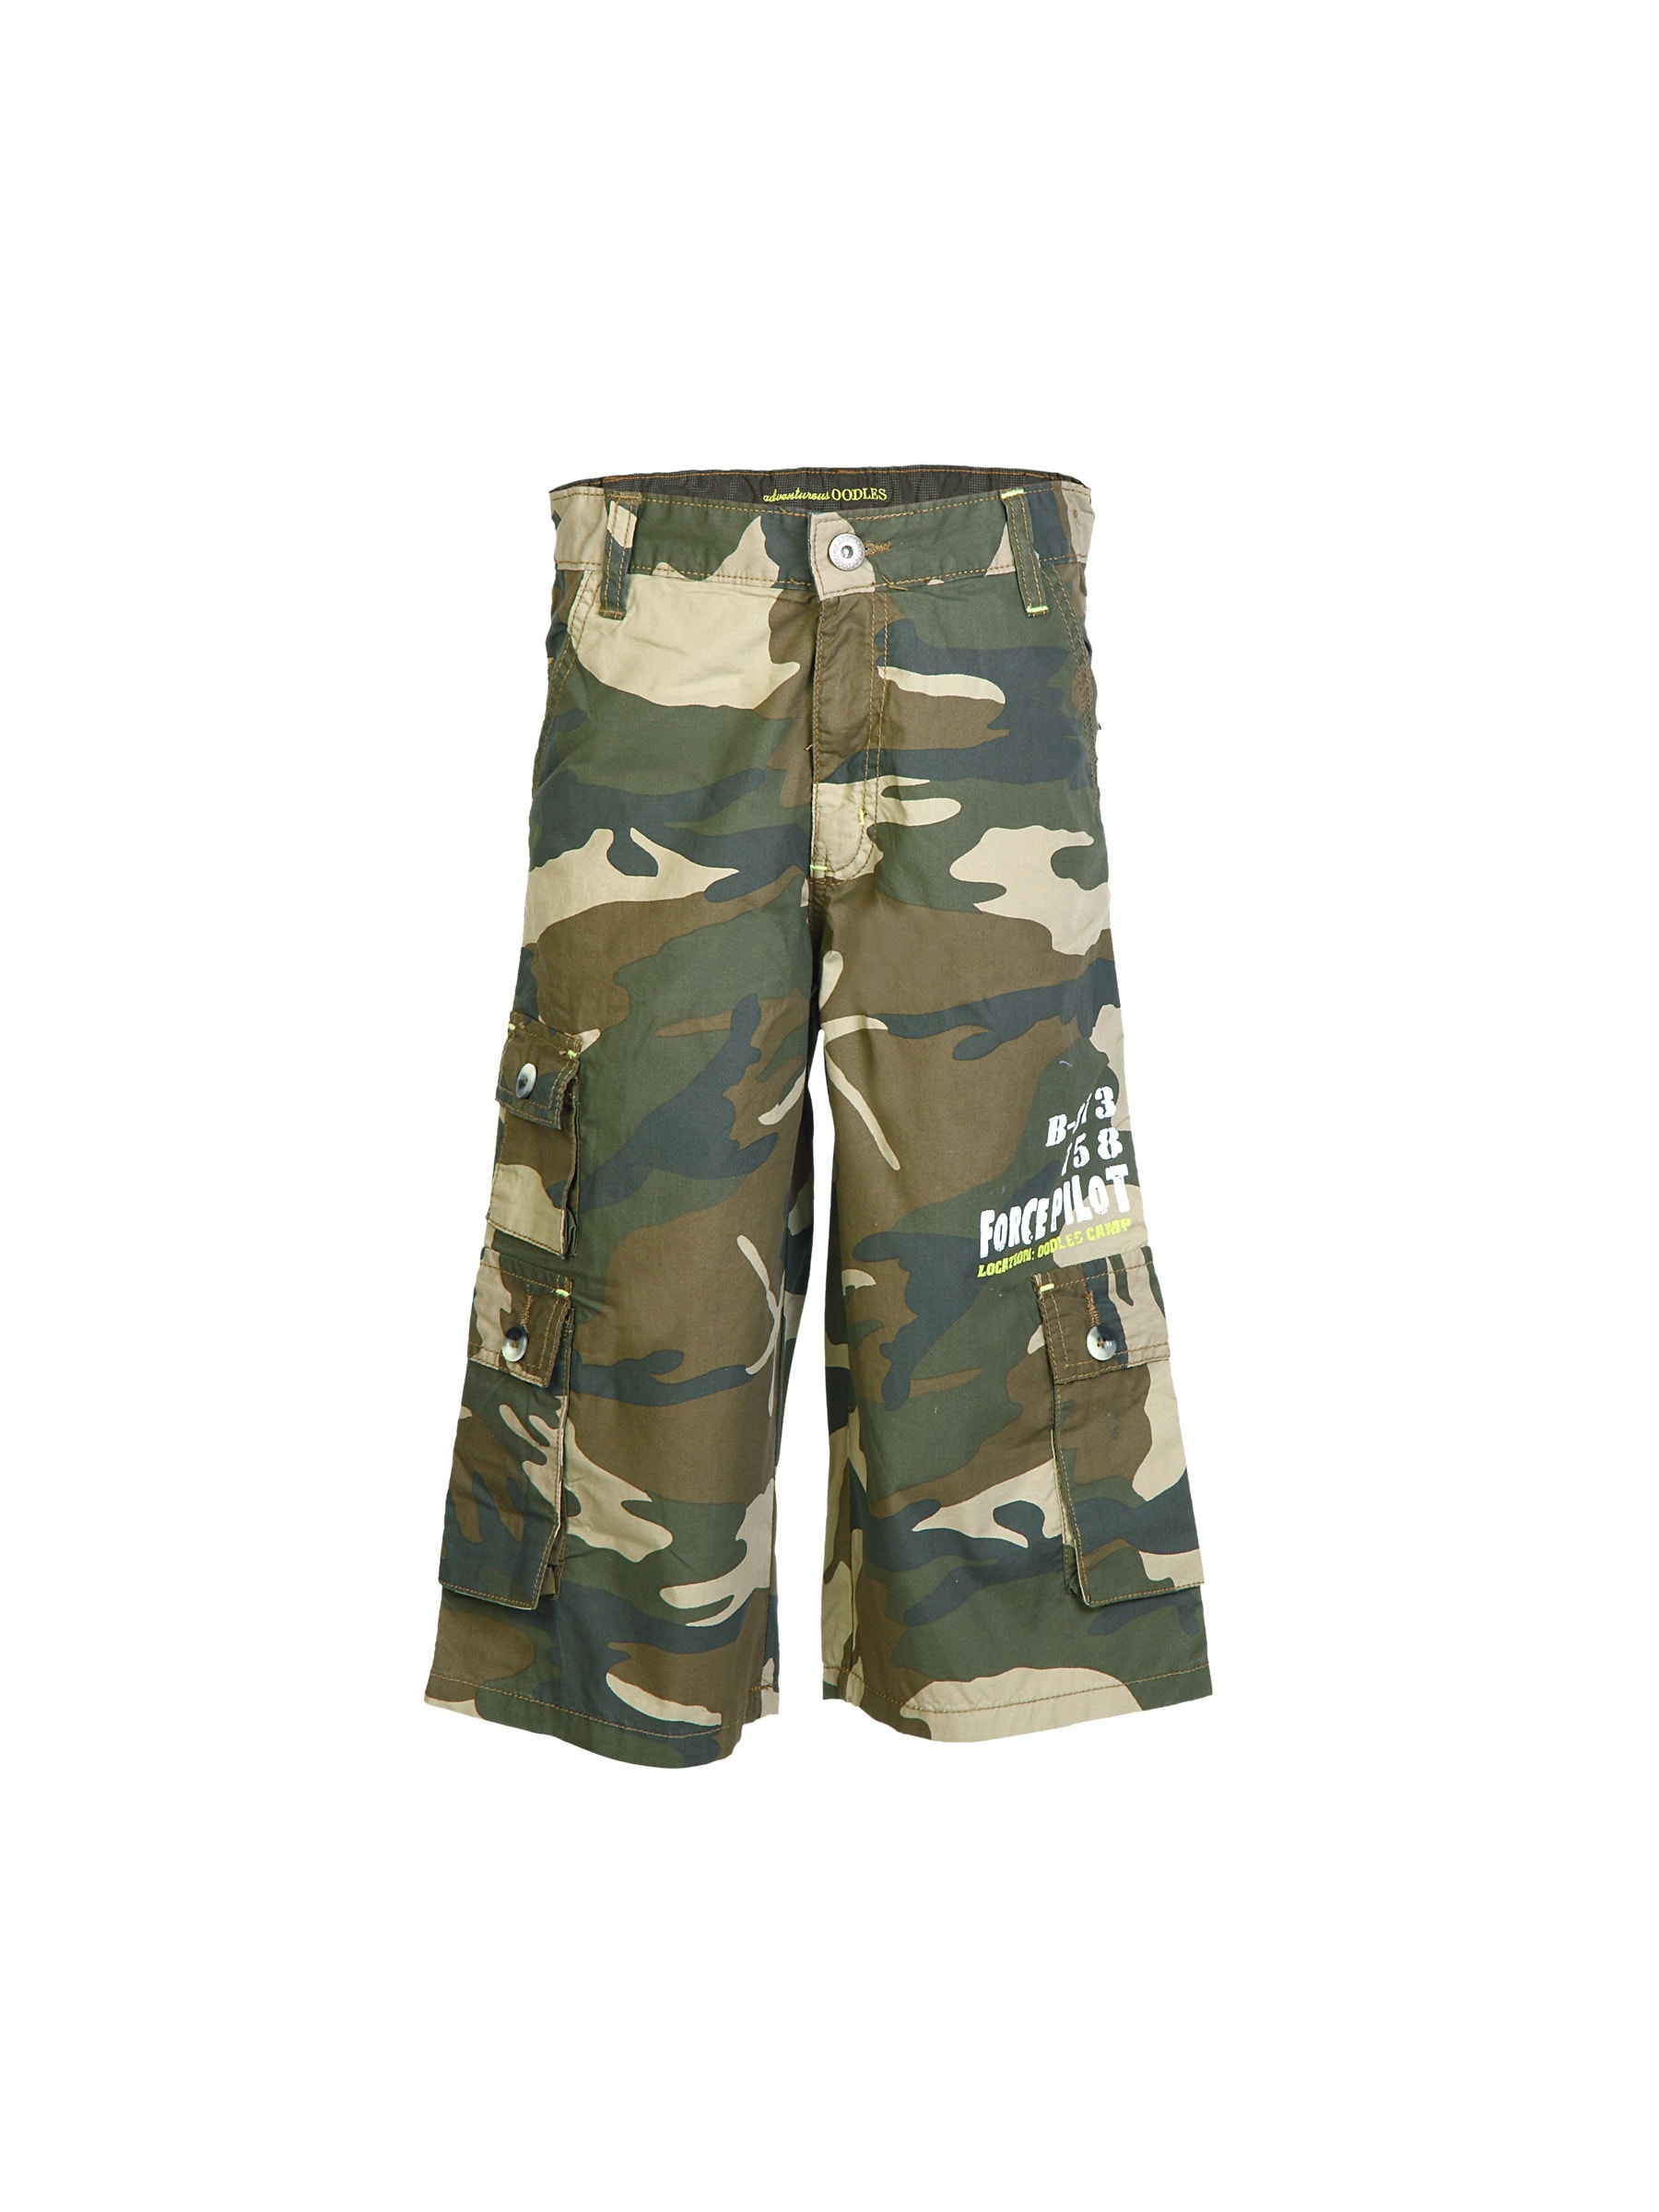 Doodle Boy Army  Green Shorts